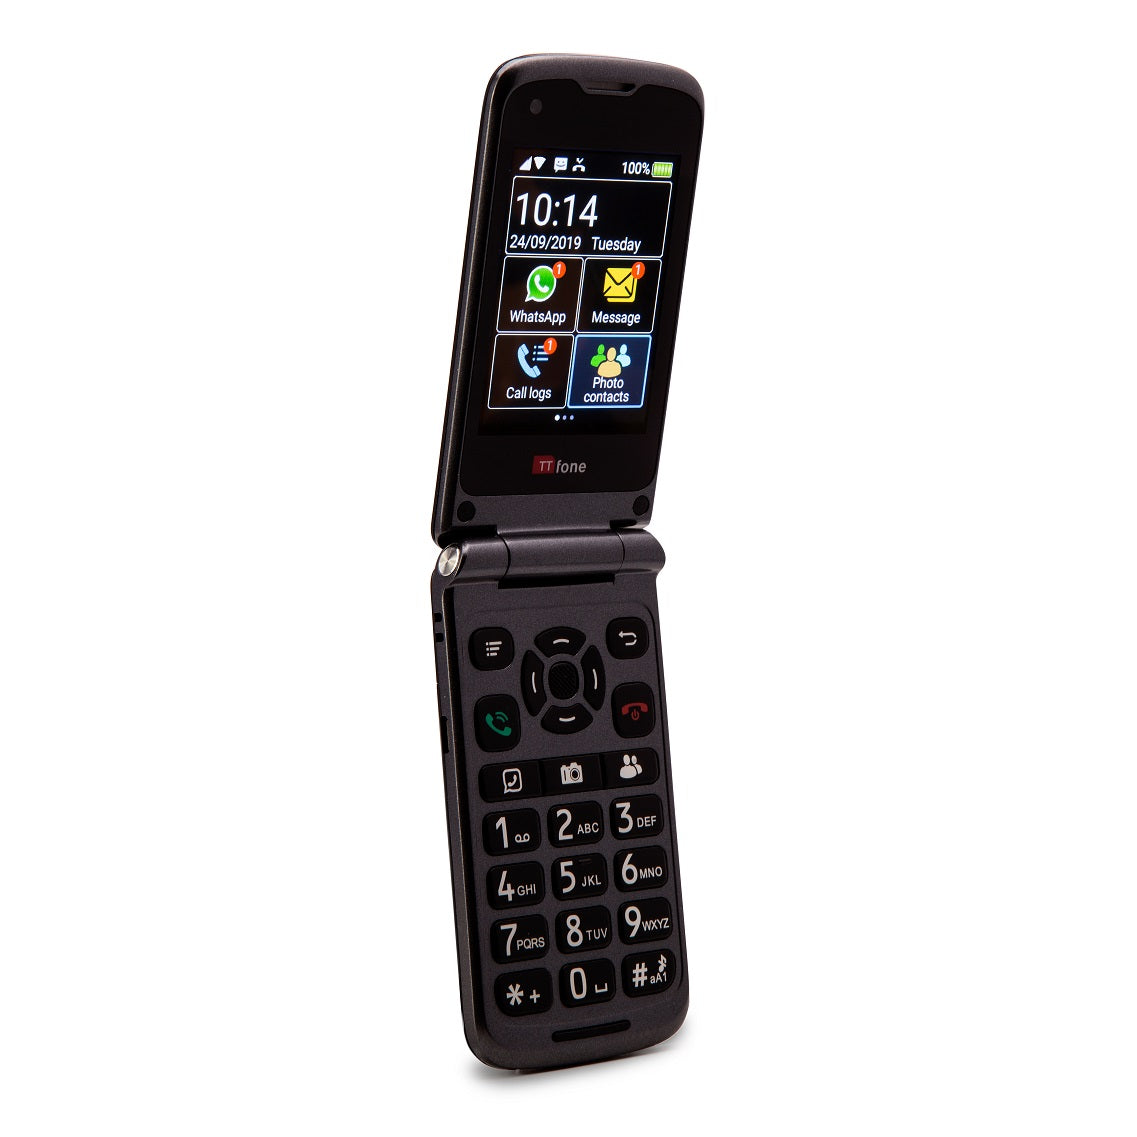  TTfone Titan TT950 featured phone